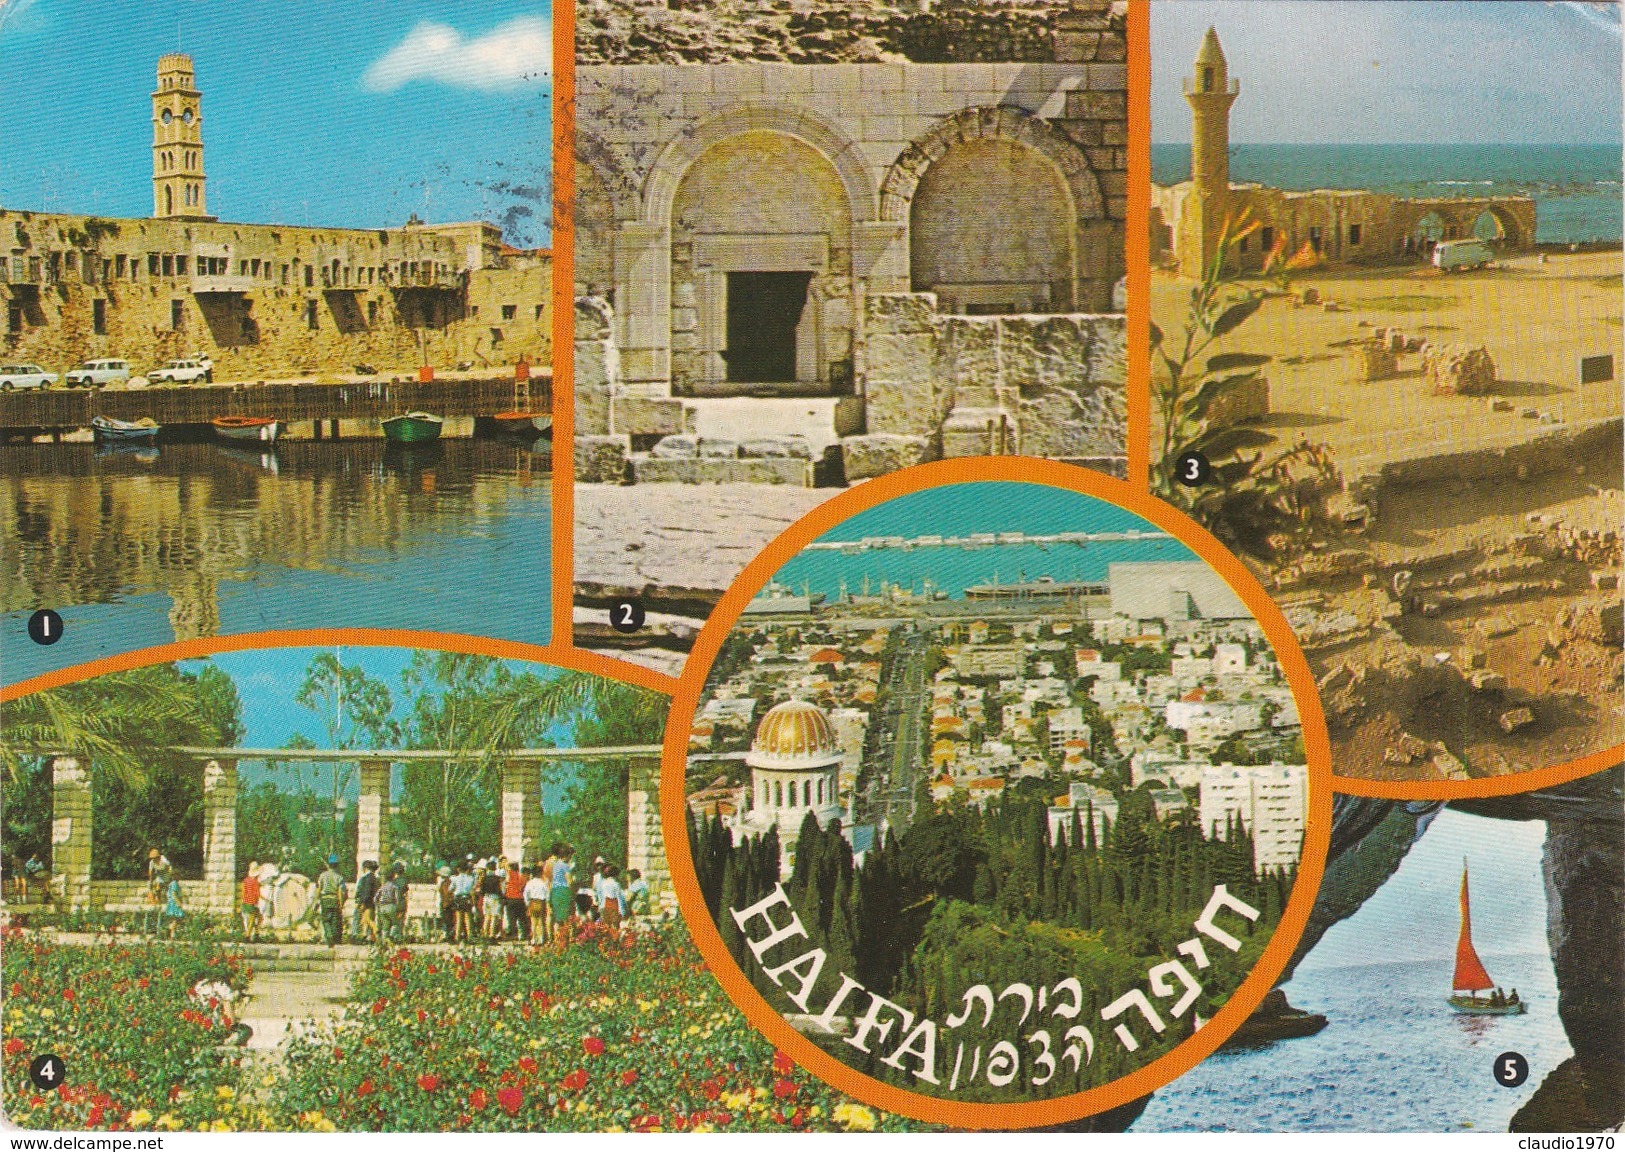 Cartolina - Postcard - Haifa ,capital Of Northern  - Israel - Israele